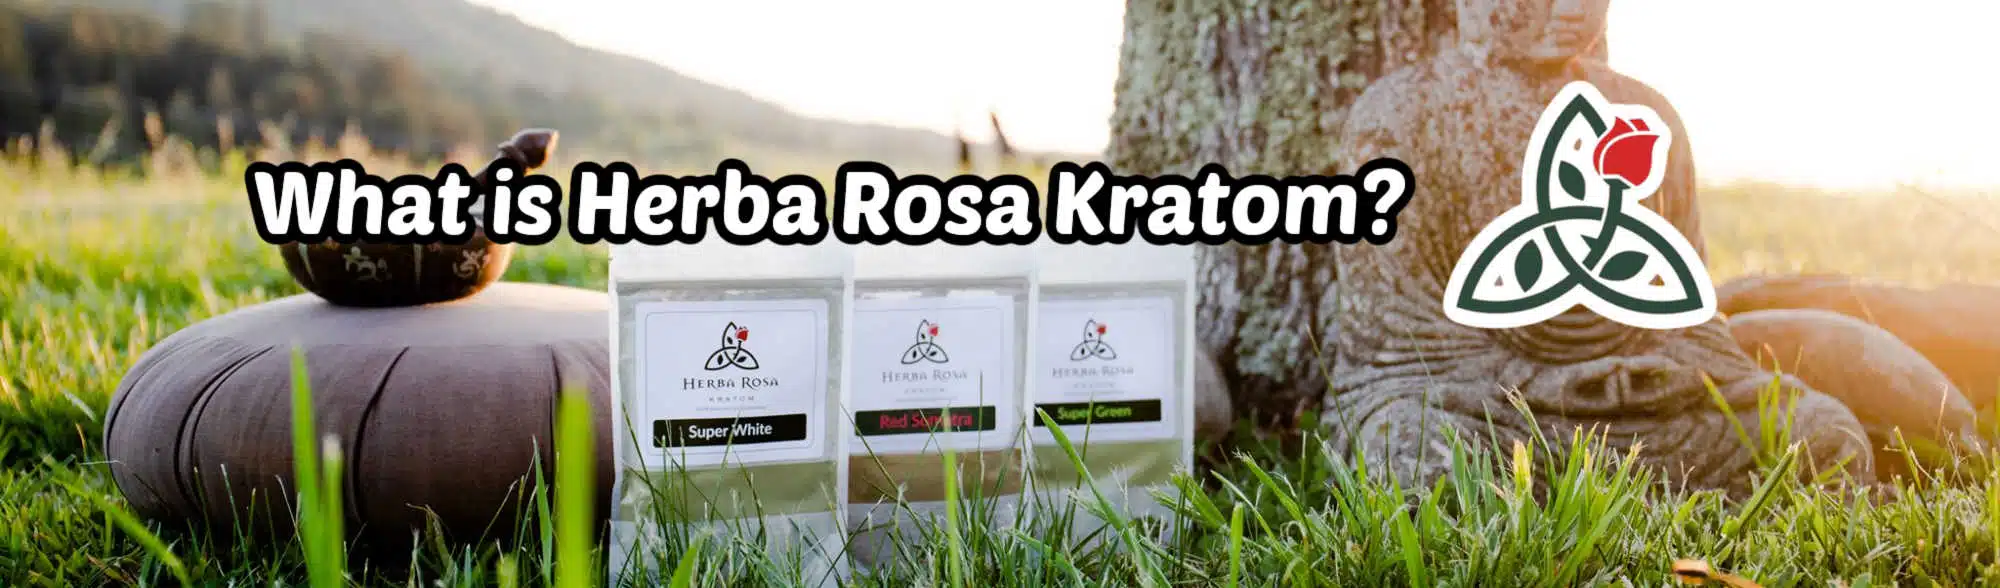 "What is herba rosa kratom?" review banner